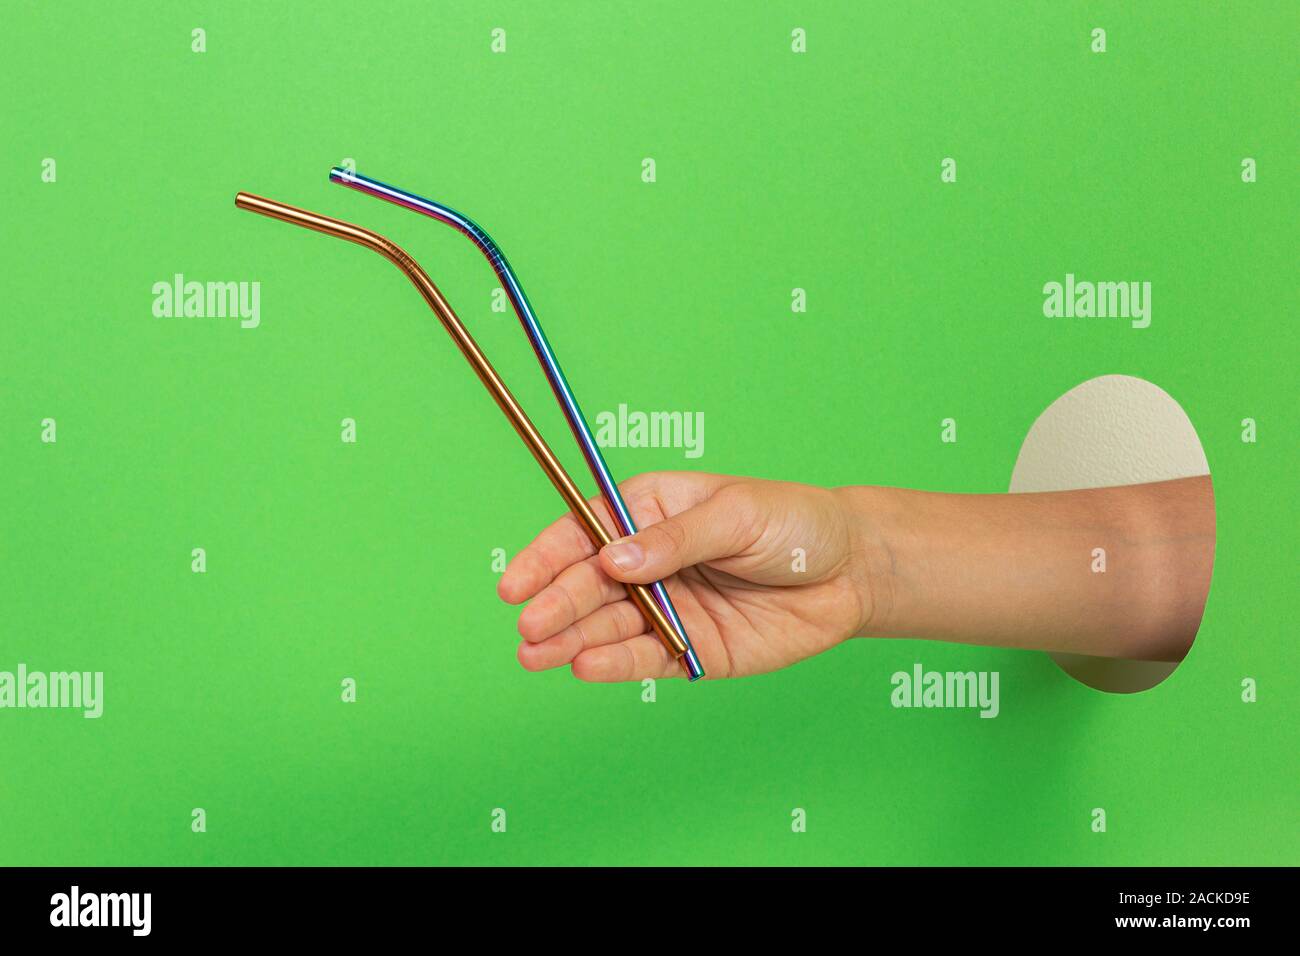 Hand through hole on light green background holding metallic reusable straws Stock Photo